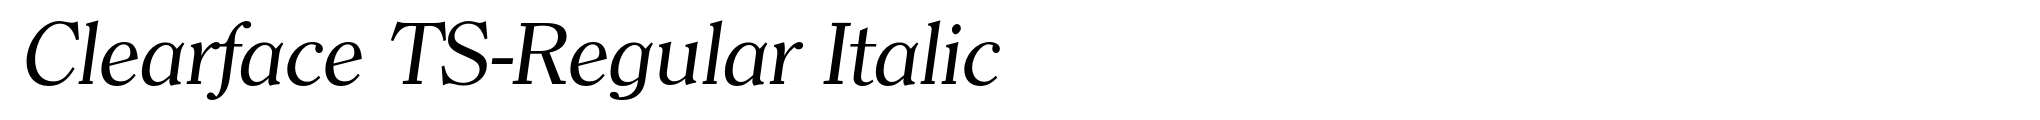 Clearface TS-Regular Italic image